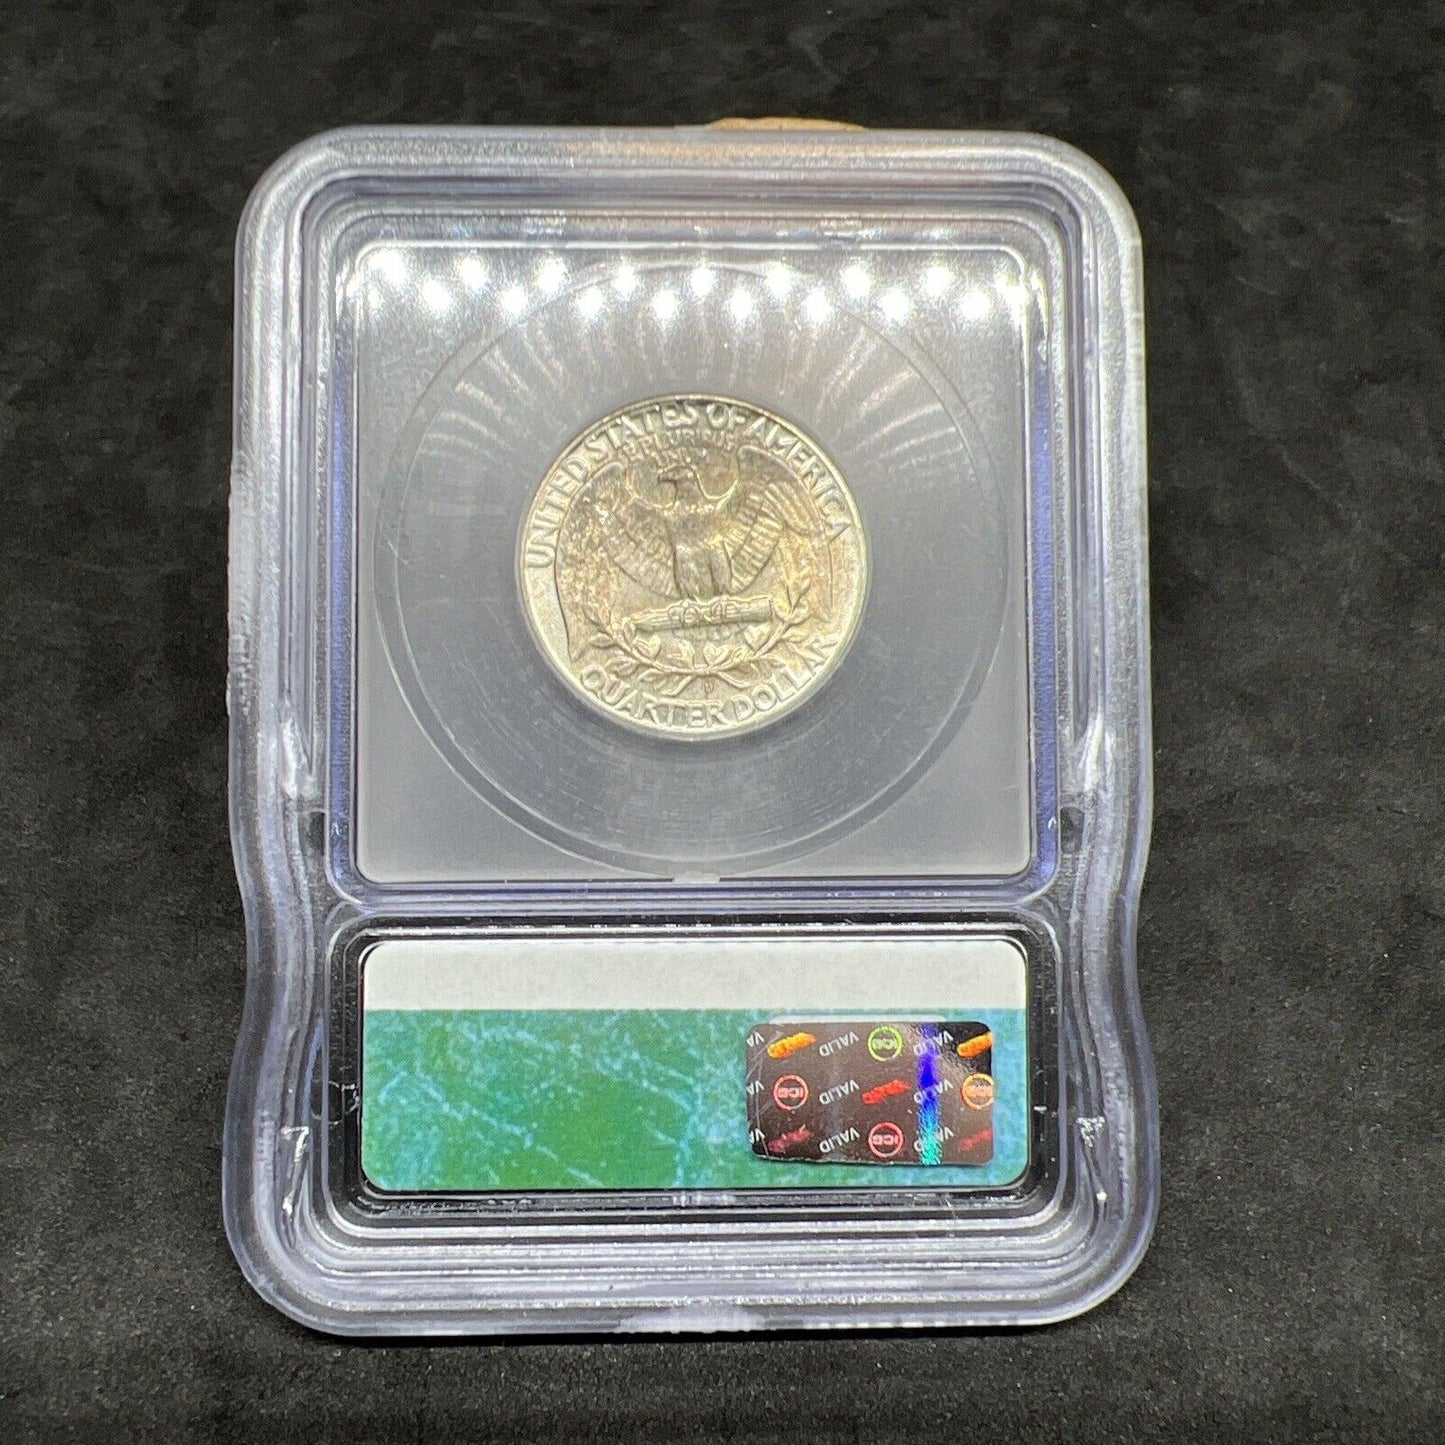 IGC Binion Hoard Mint State UNC Type 1964 P 25c Washington Silver Quarter Coin